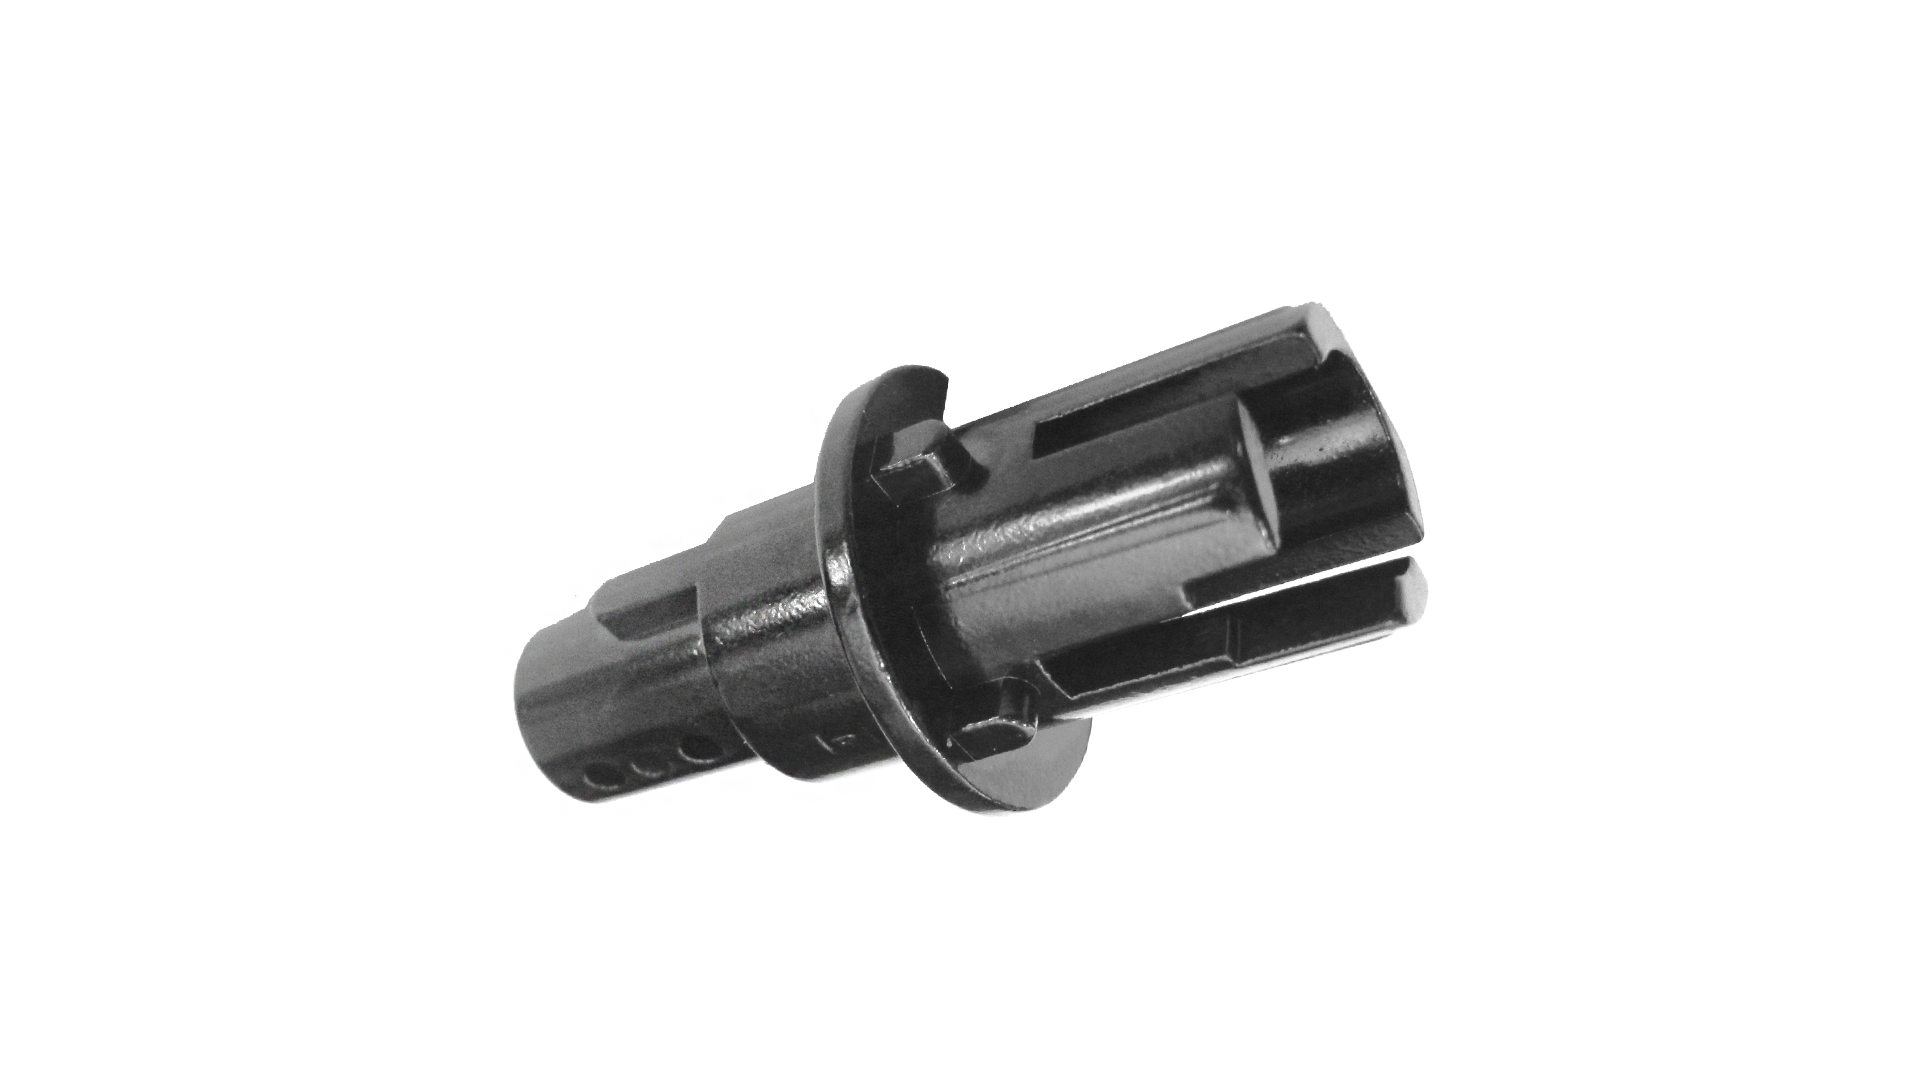 ICS MA-239 UK1 metal outer barrel adaptor